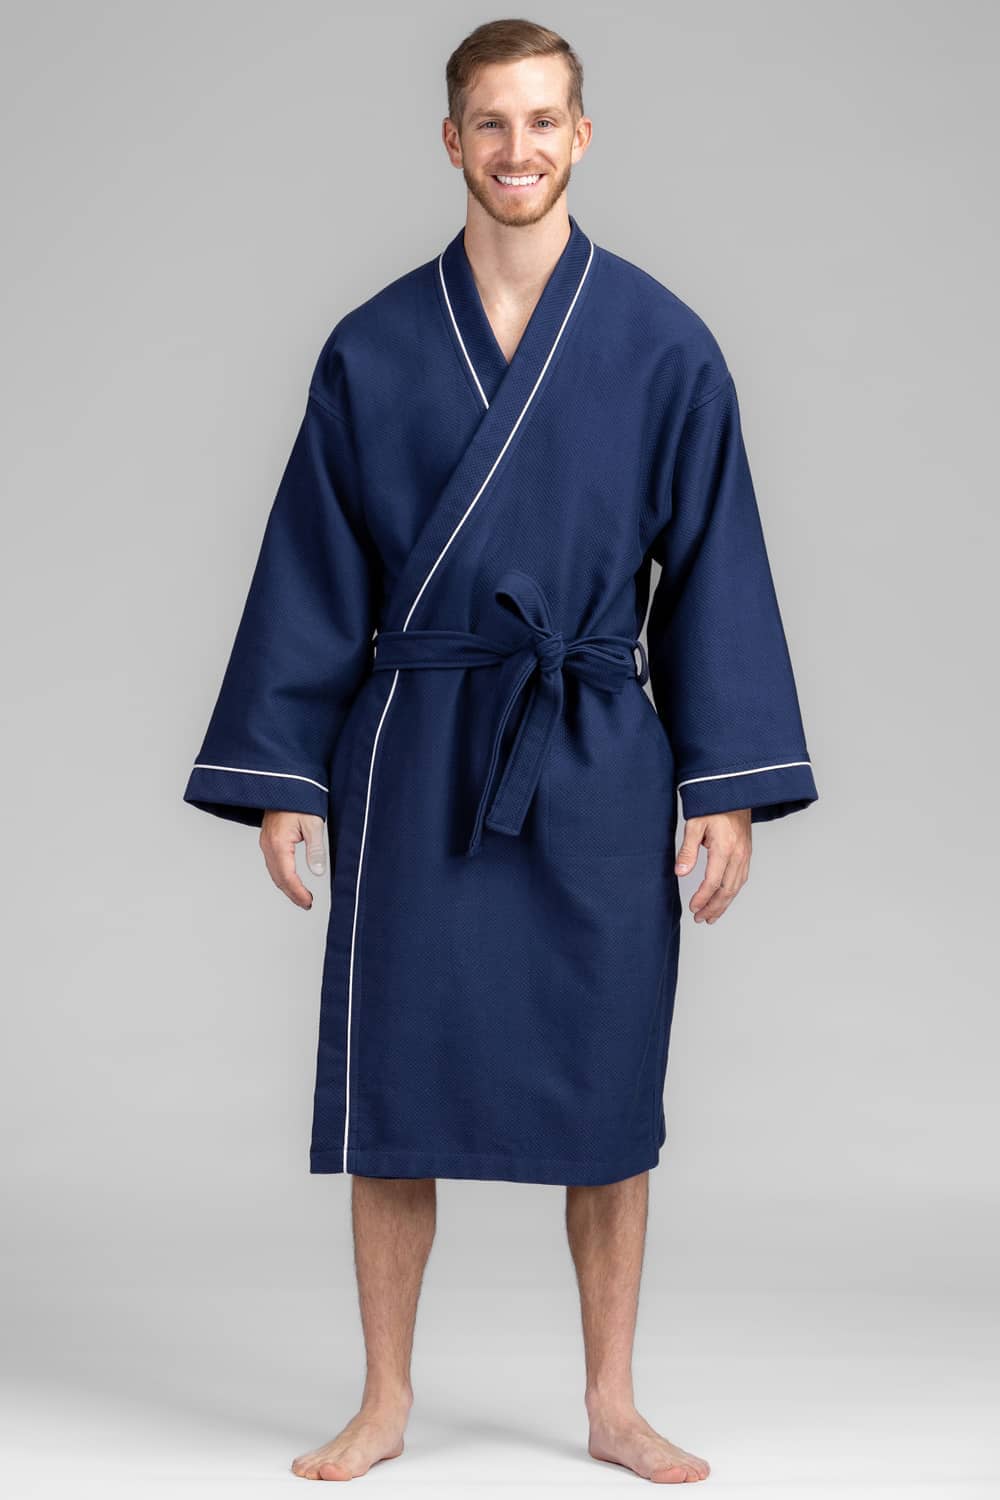 Texere Men's Modal Kimono Bathrobe with Quilted Design Mens>Sleepwear>Robe Fishers Finery MIDNIGHT BLUE MEDIUM 